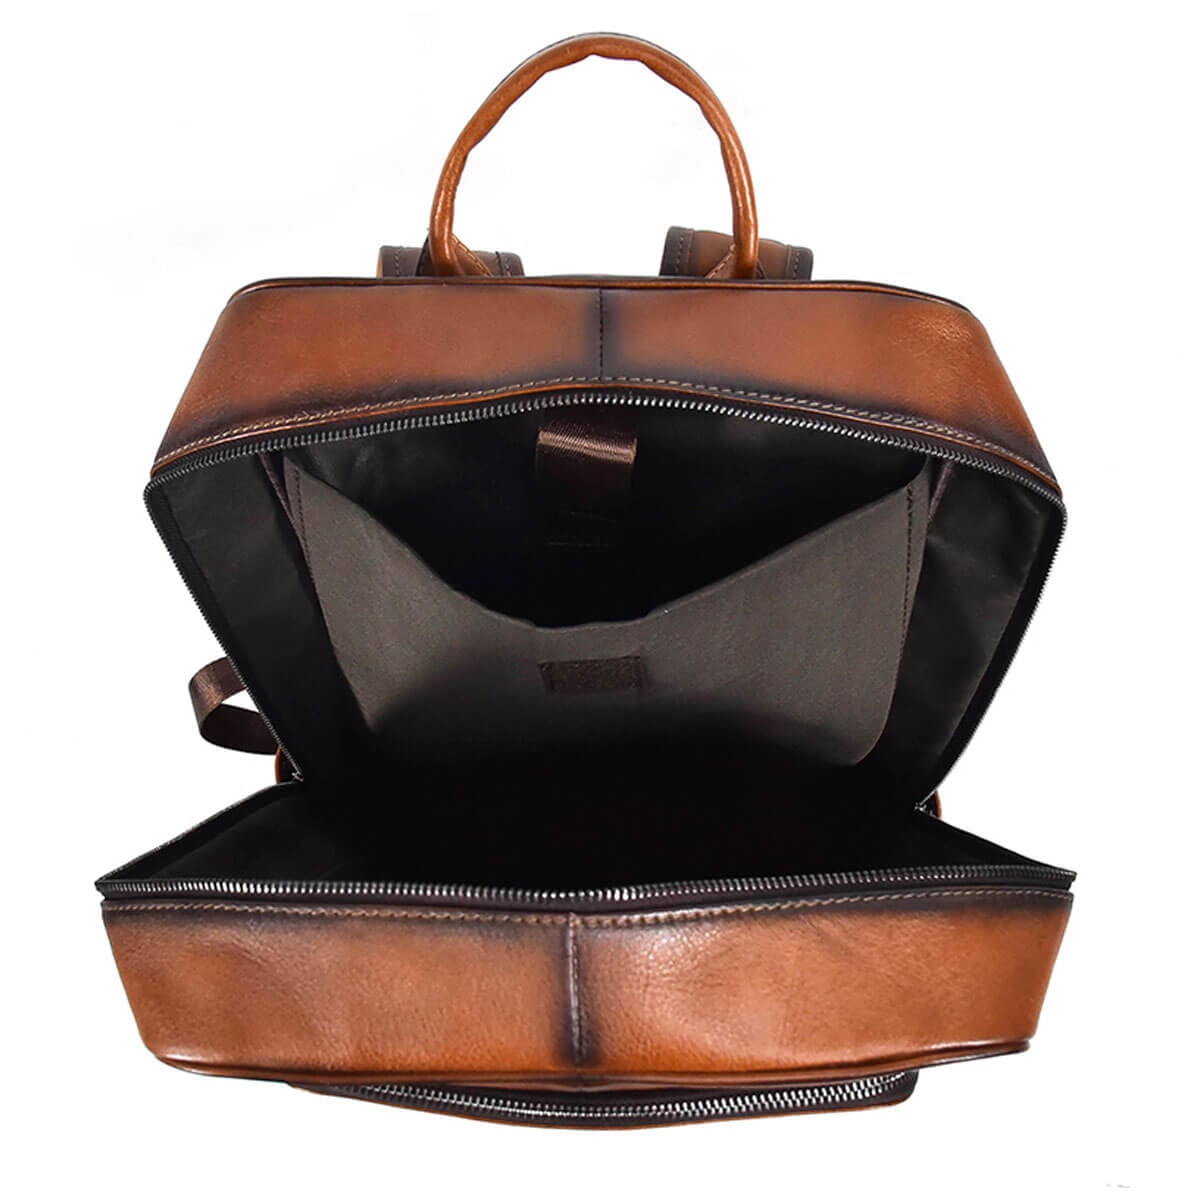 Vintage Brown Genuine Leather Luxury Laptop Business Backpack